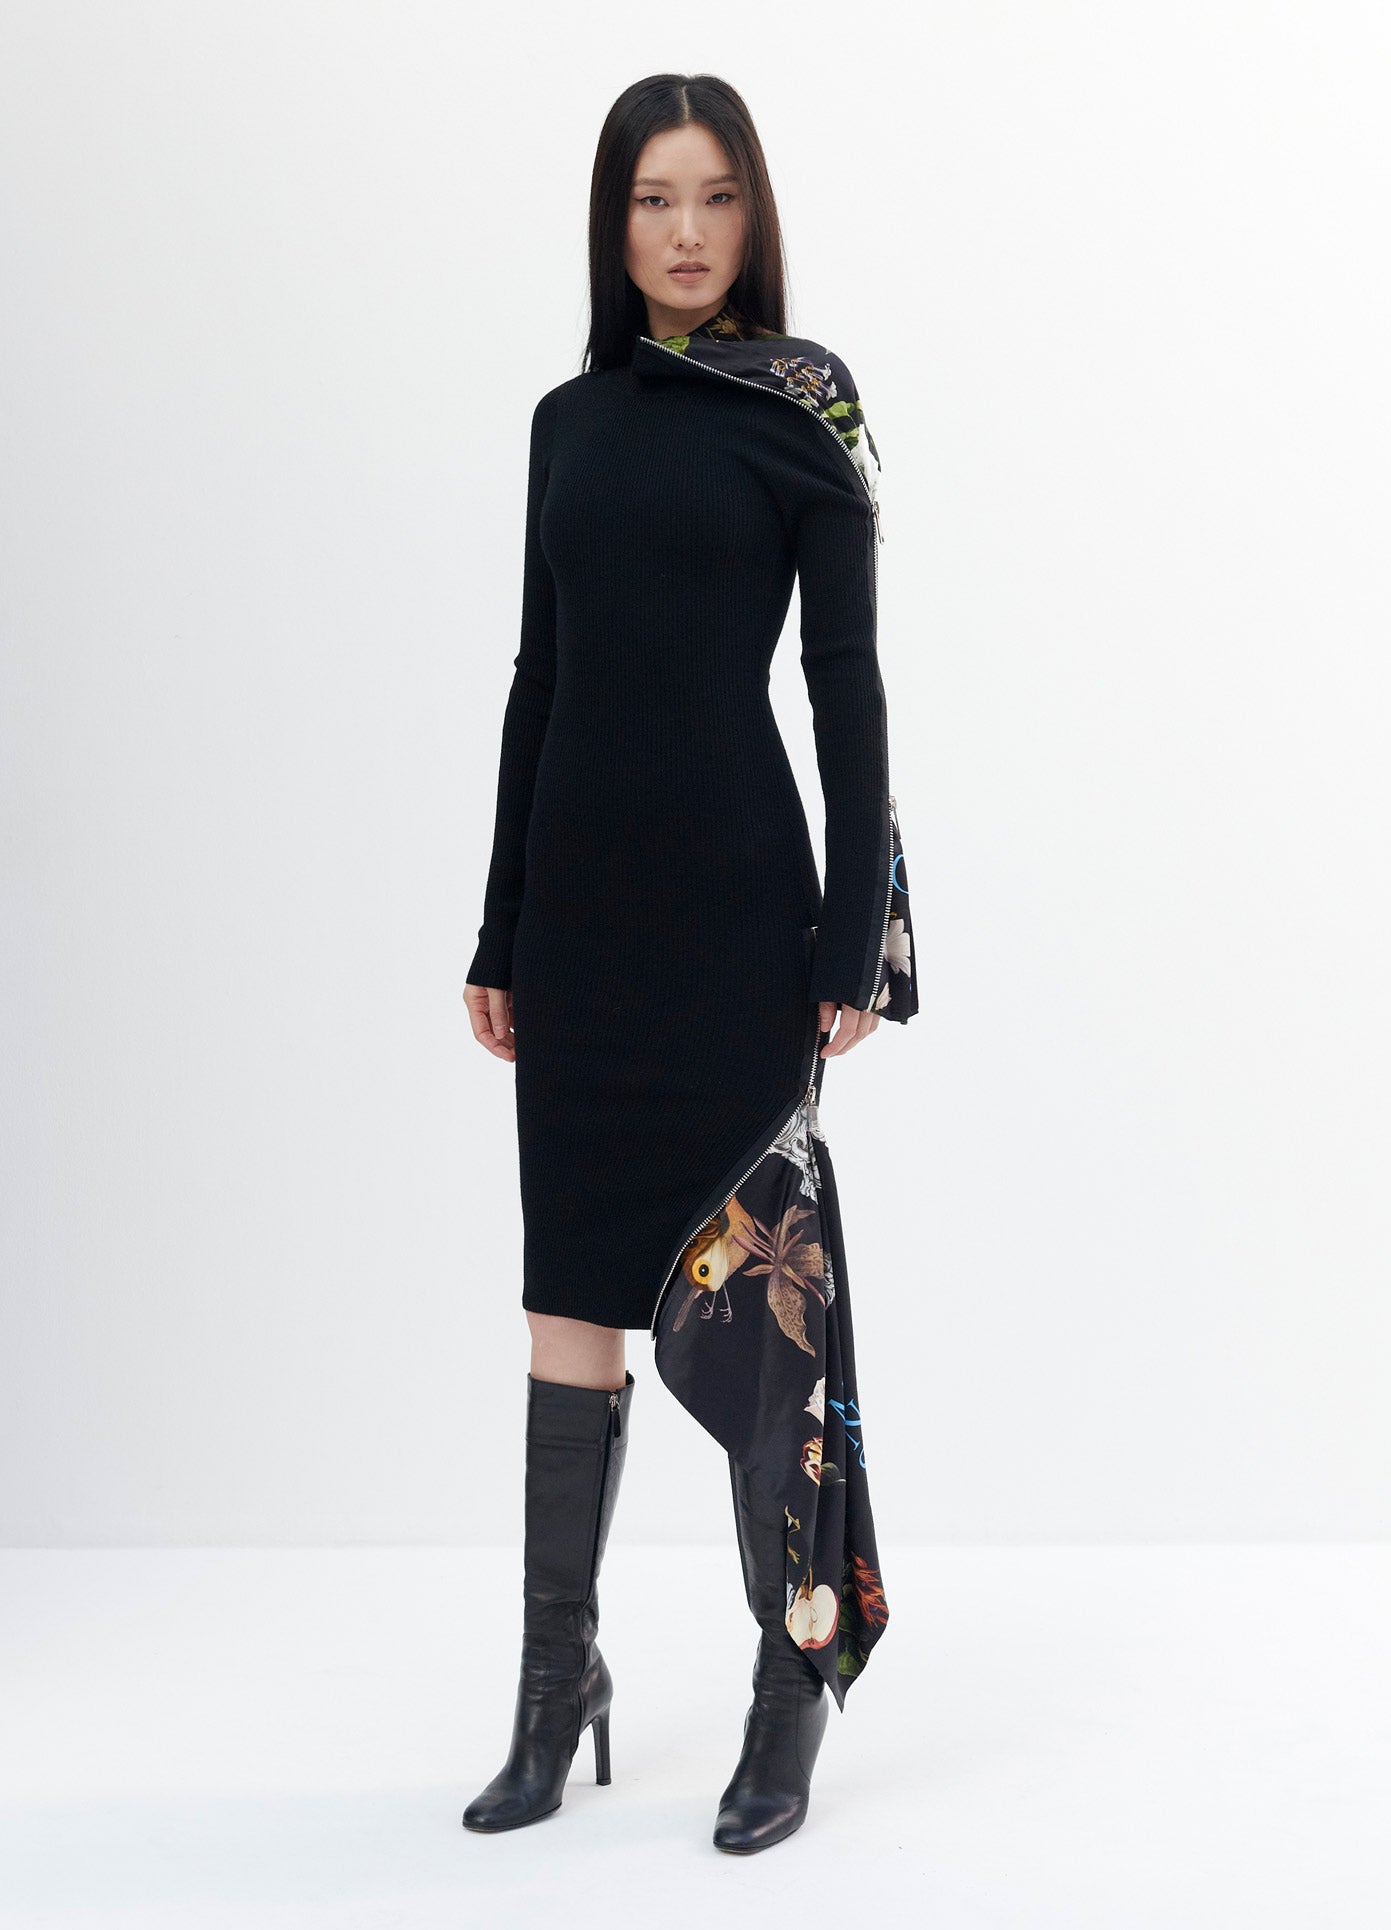 MONSE Long Sleeve Print Inset Zipper Detail Turtleneck Dress in Black Print on Model Full Front View